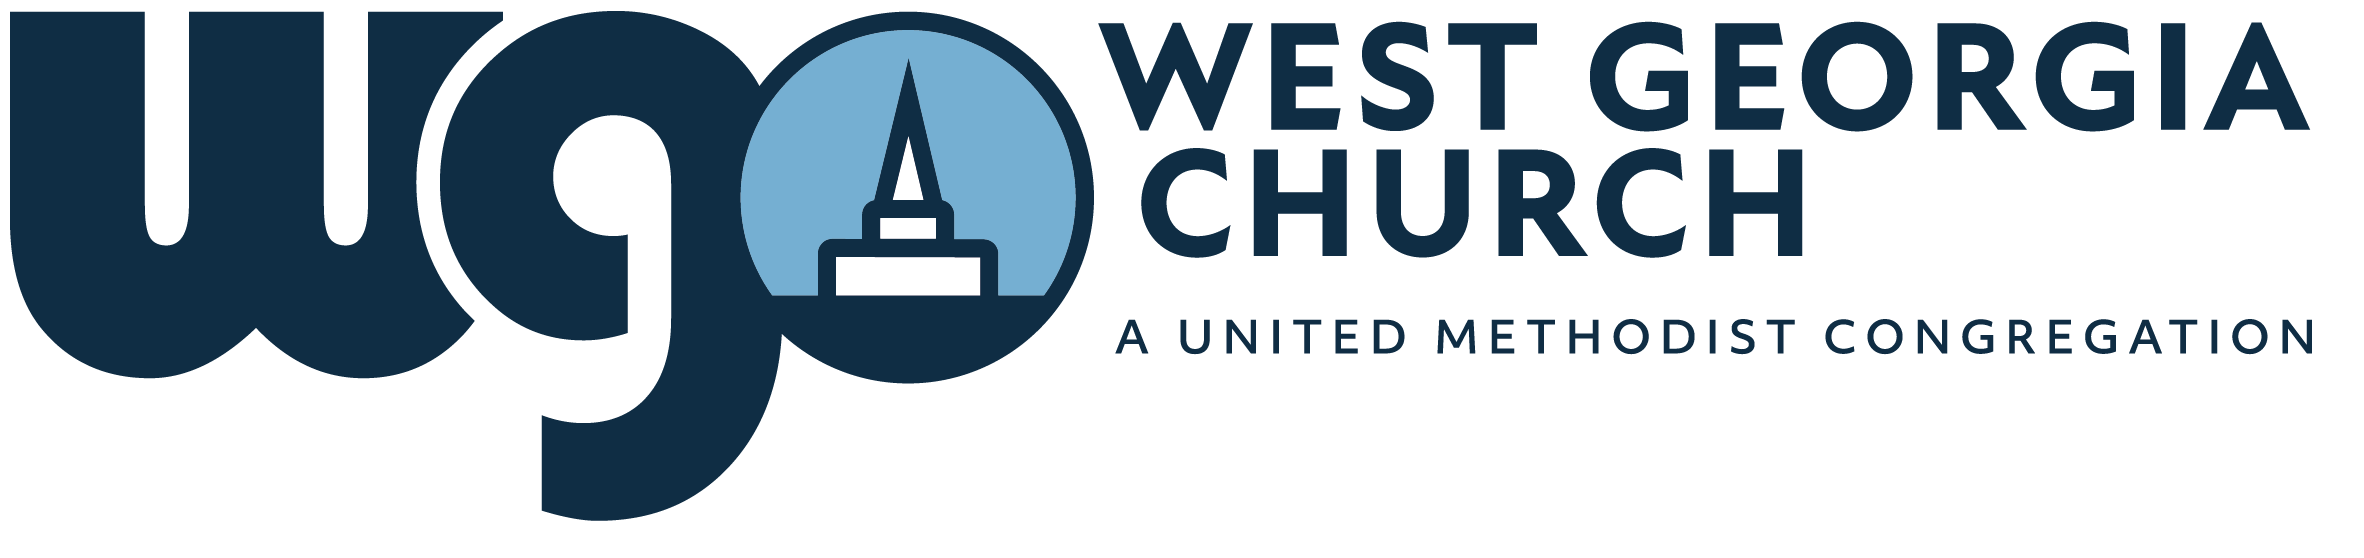 West Georgia Church